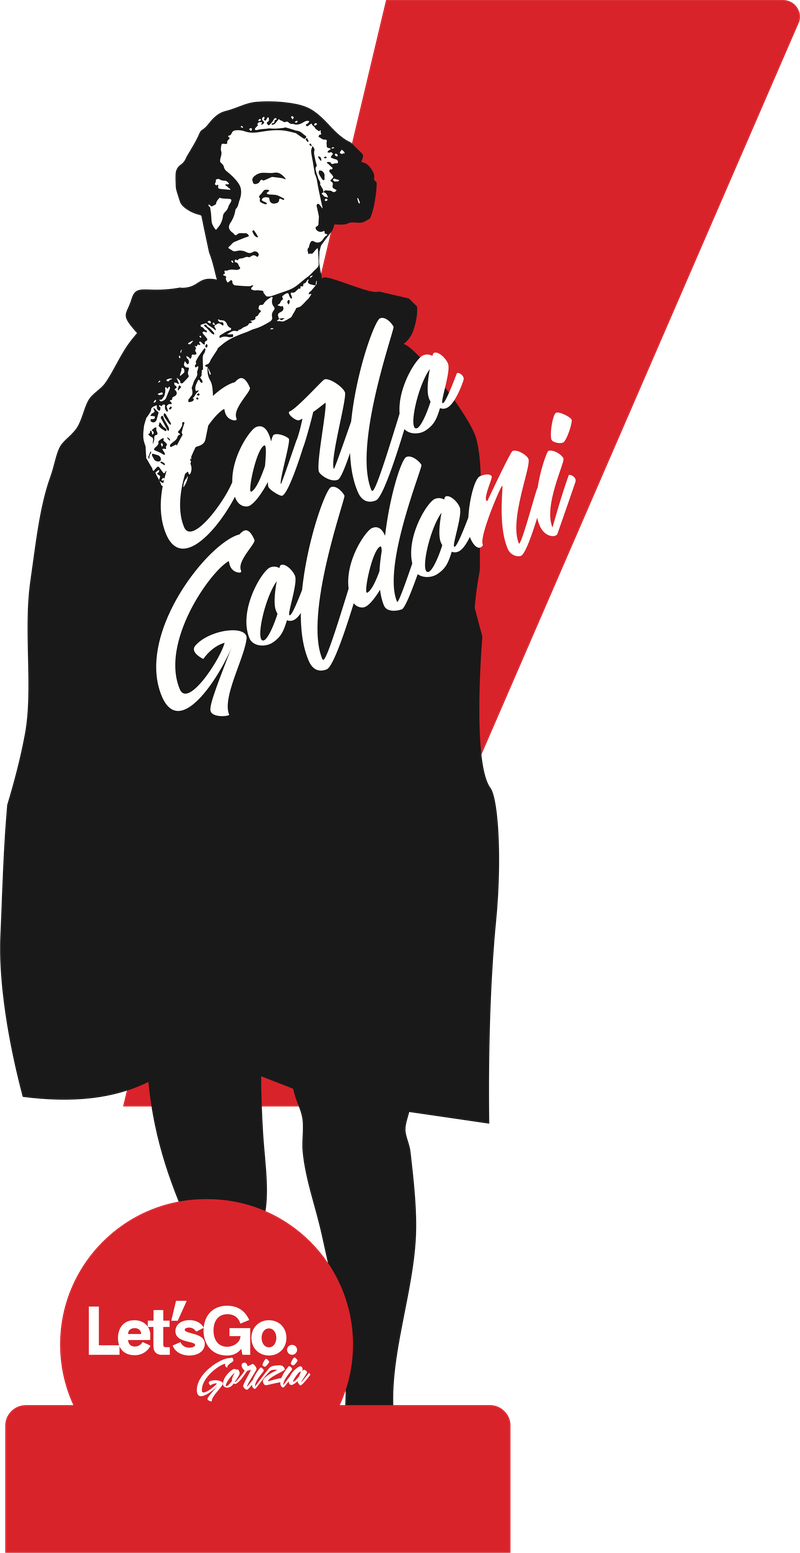 Carlo Goldoni - Sagoma